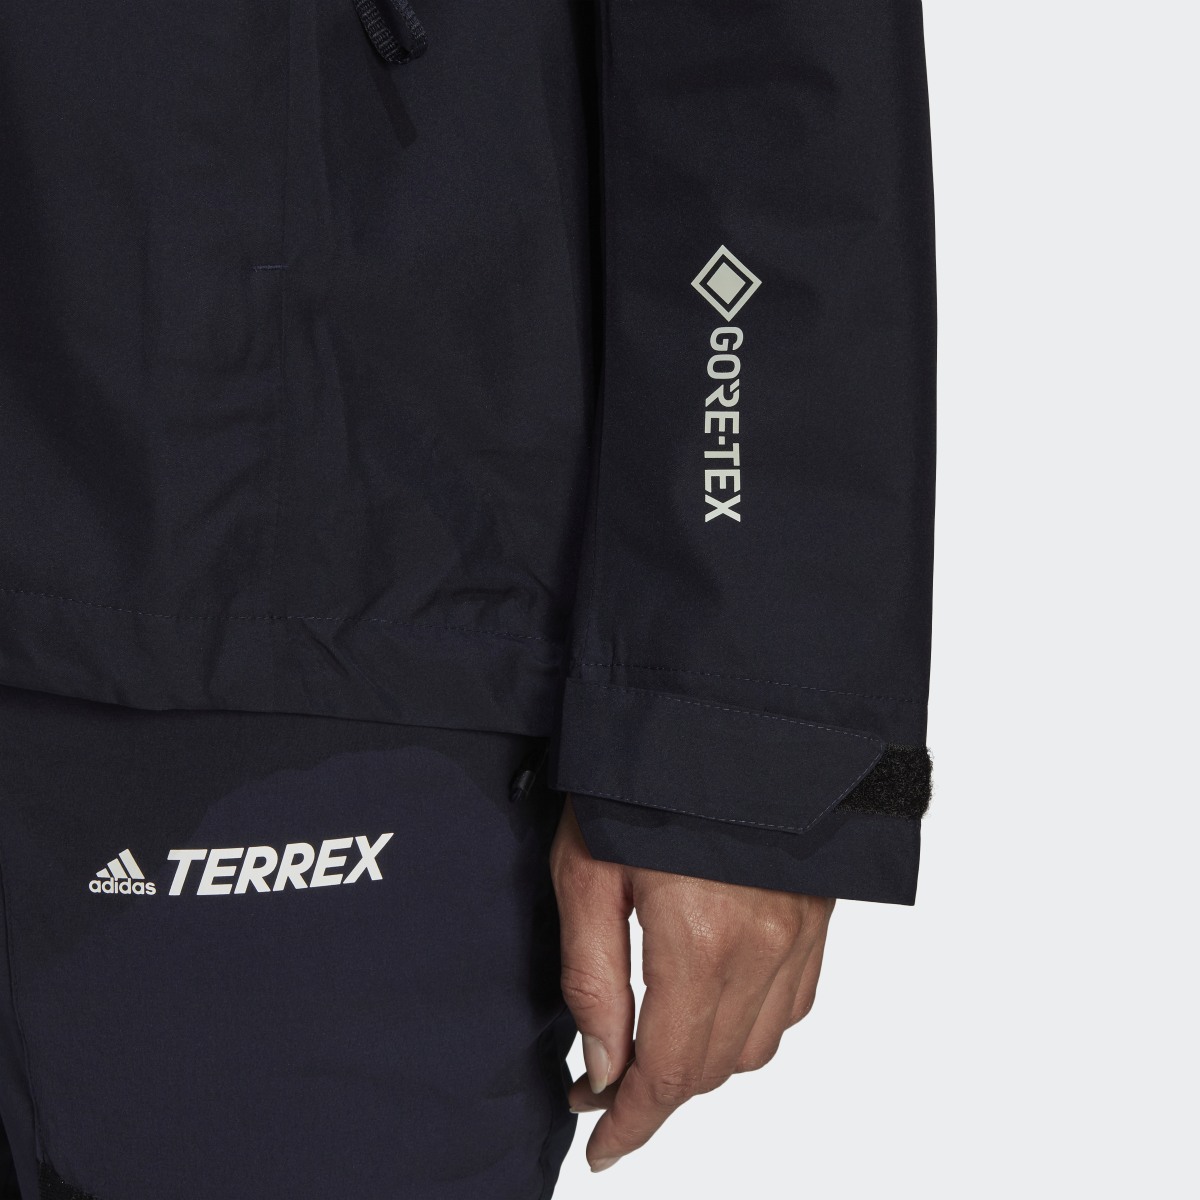 Adidas Terrex GORE-TEX Paclite Rain Jacket. 9